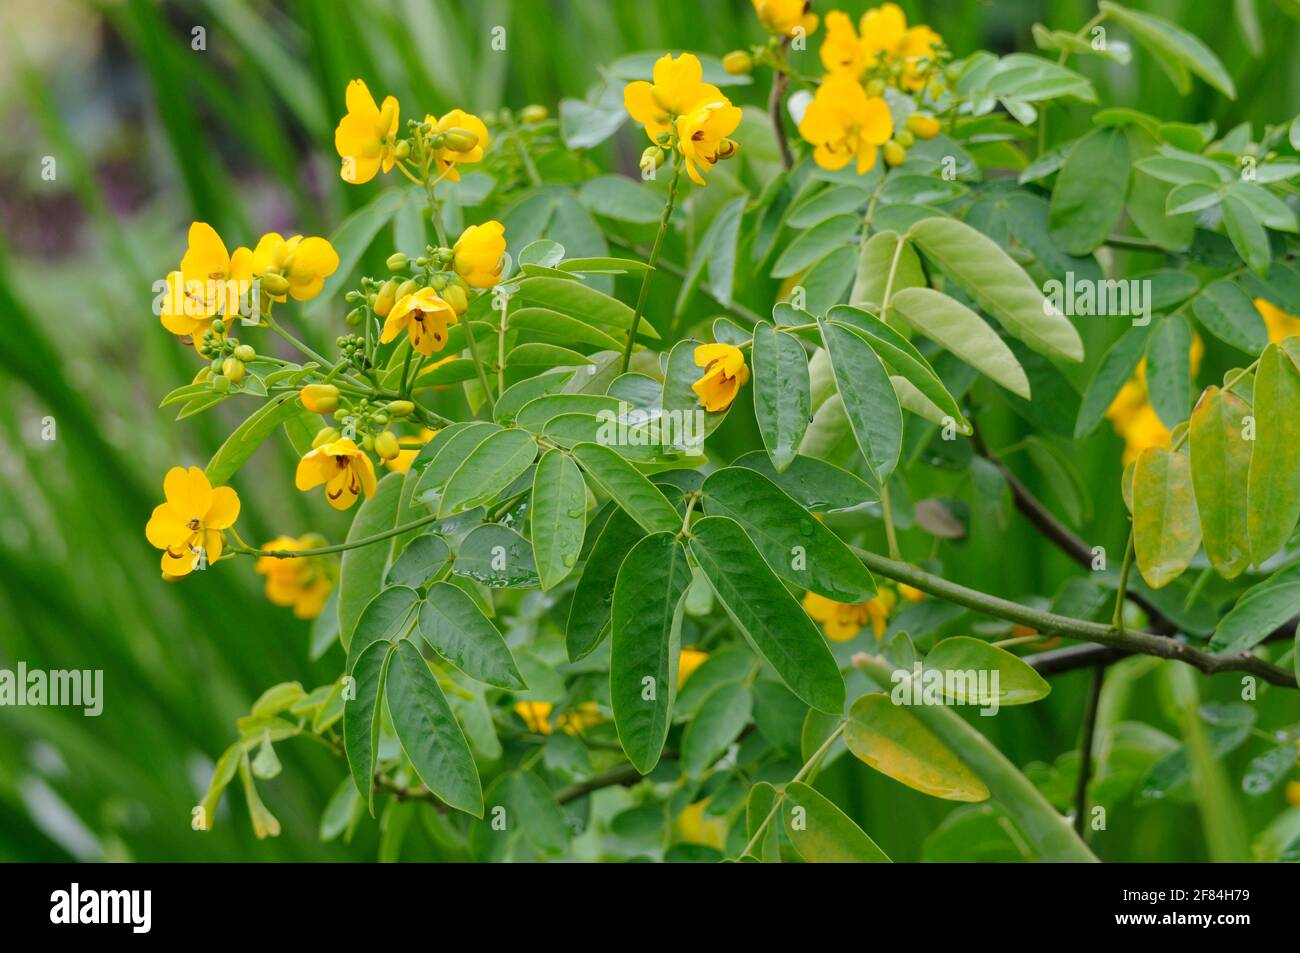 Senna (Senna) (Cassia angustfolia), Indian Stock Photo